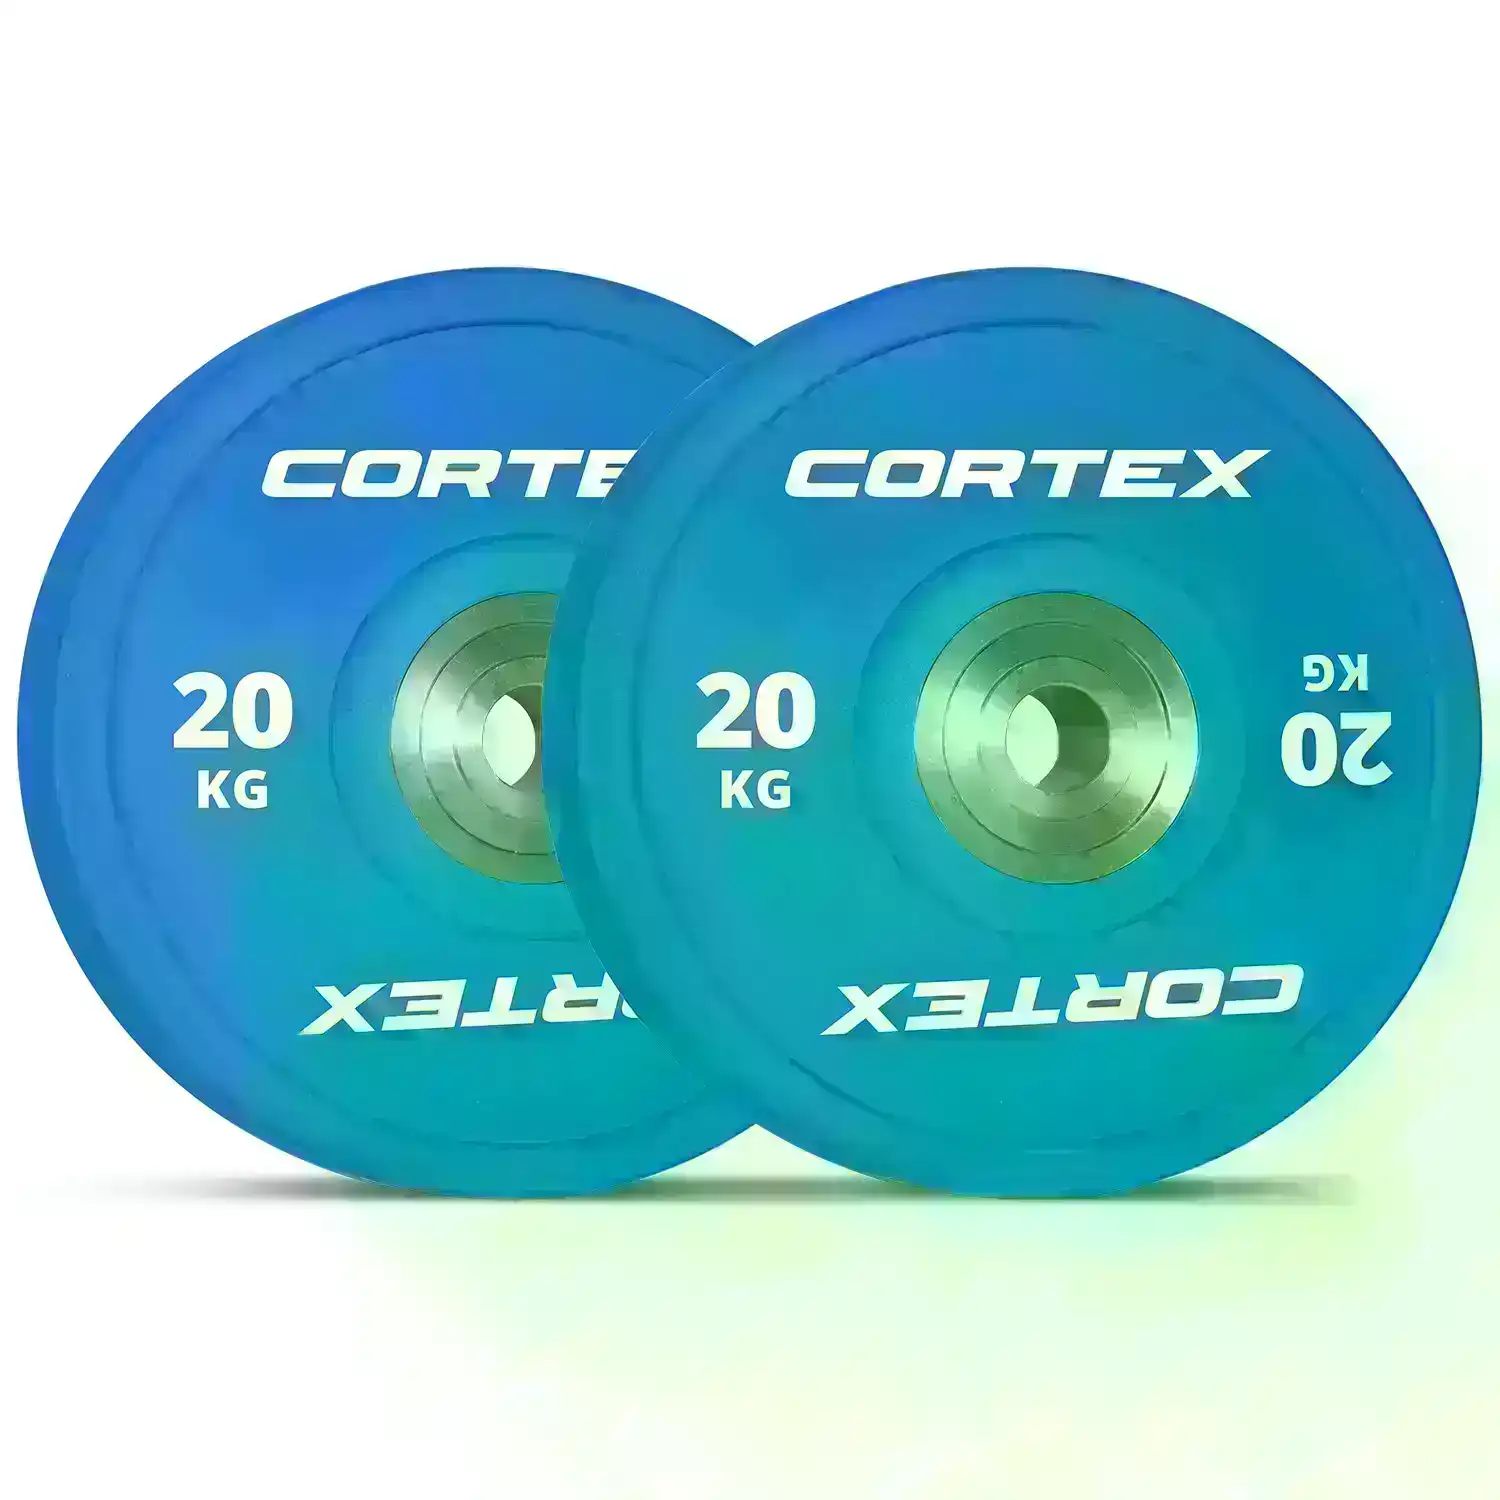 Cortex 20kg Competition Bumper Plates (Pair)